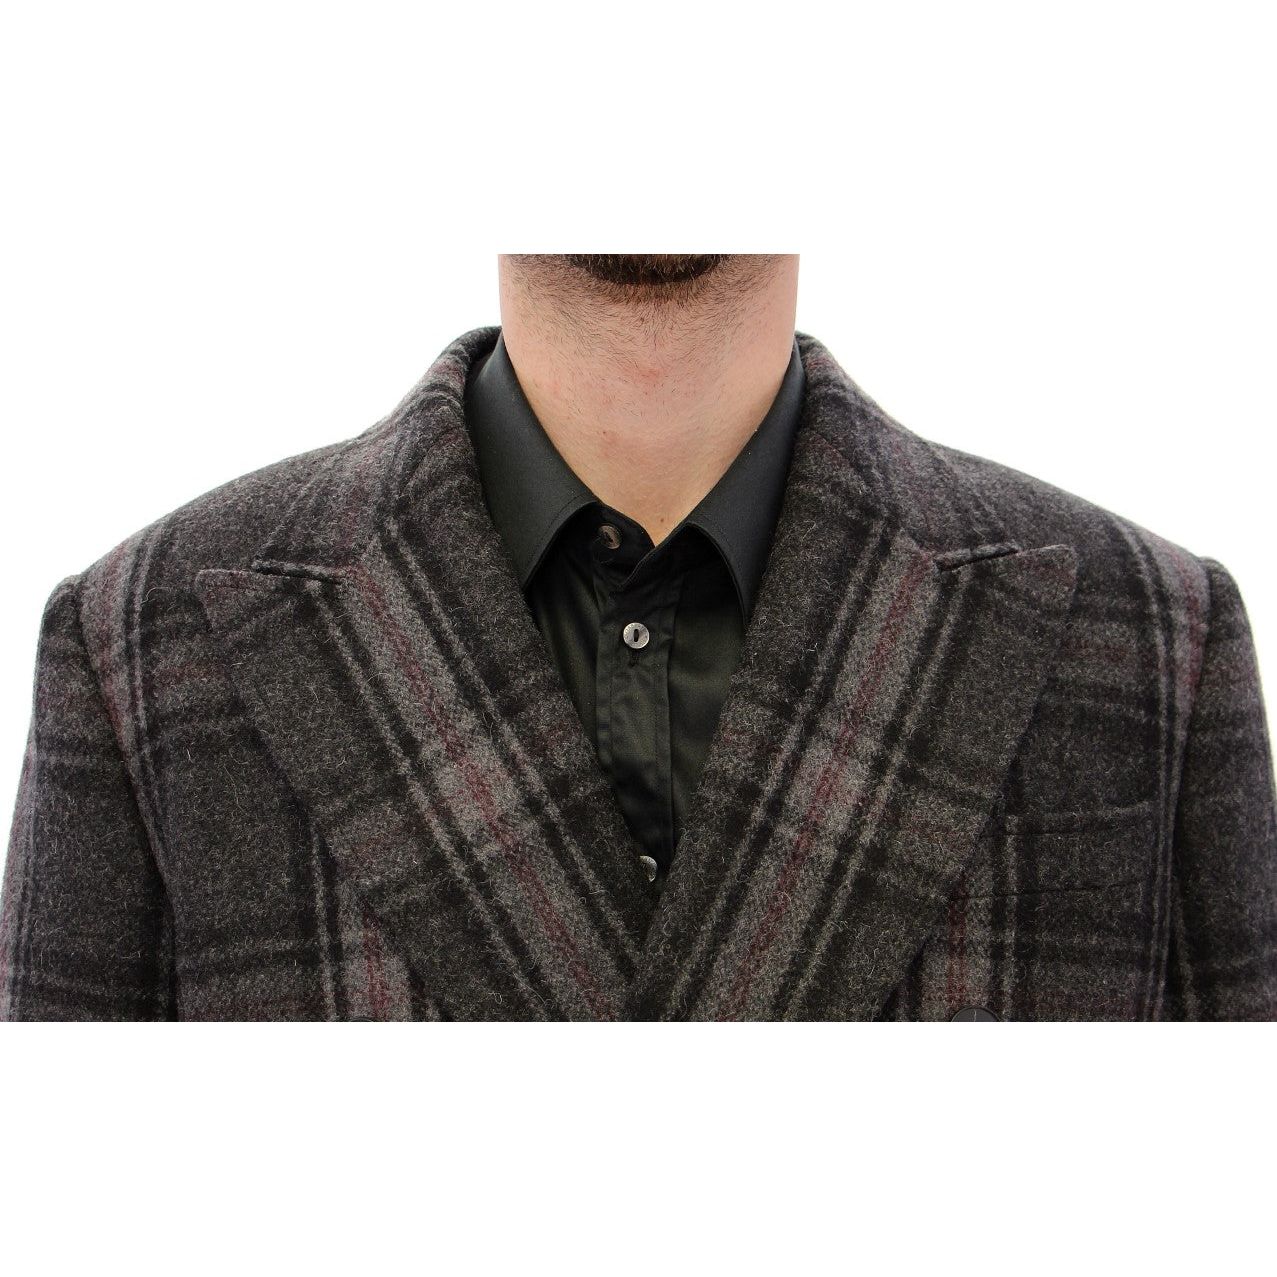 Dolce & Gabbana Sicilia Checkered Wool Blend Coat gray-double-breasted-coat-jacket Coats & Jackets 53557-gray-double-breasted-coat-jacket-5.jpg